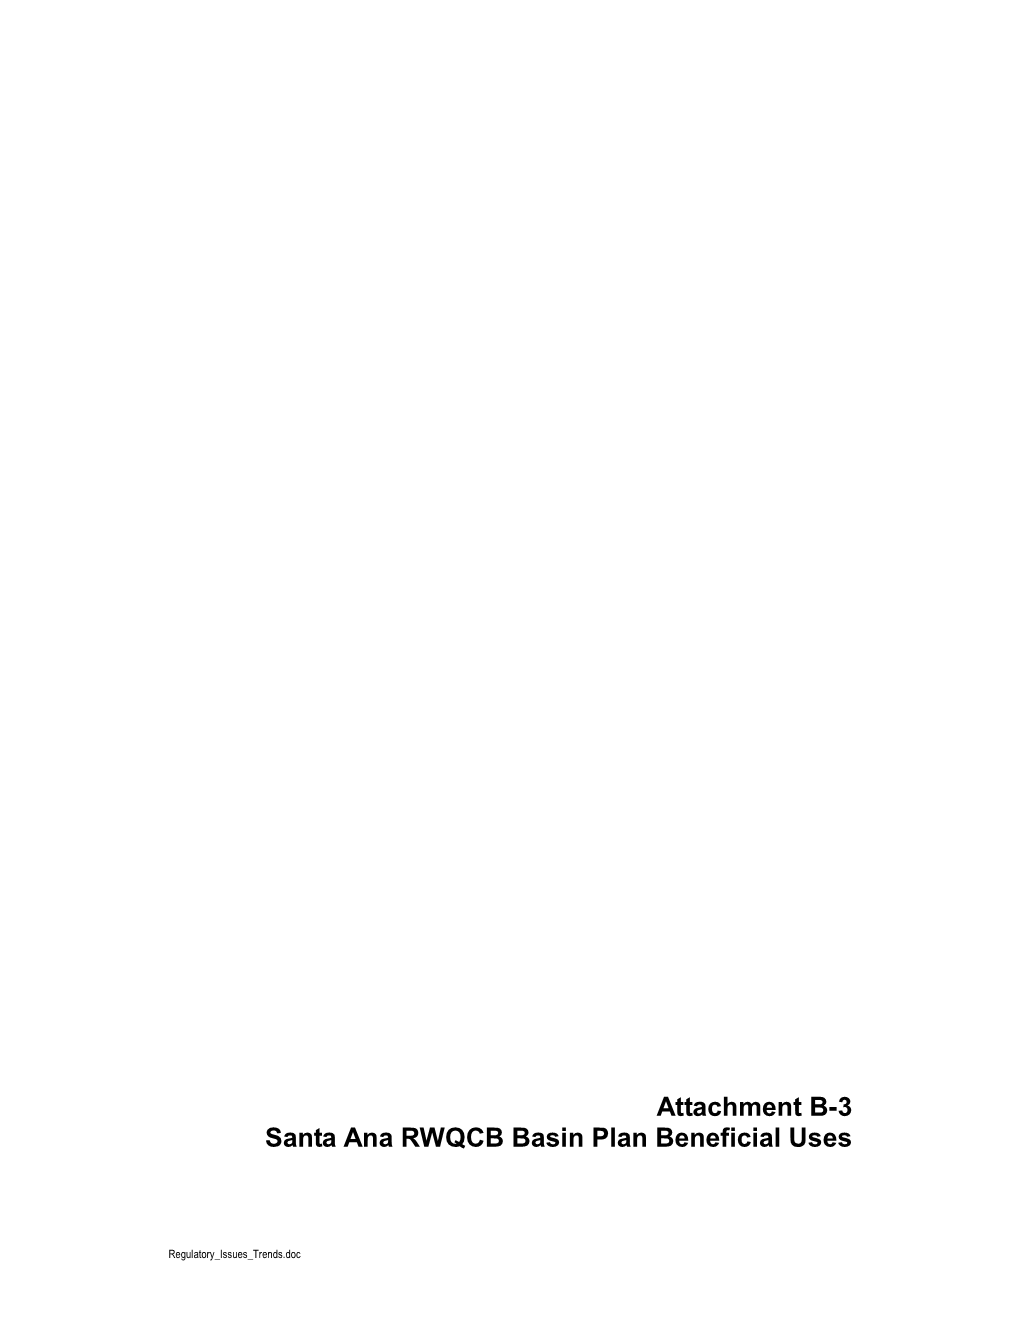 Attachment B-3 Santa Ana RWQCB Basin Plan Beneficial Uses